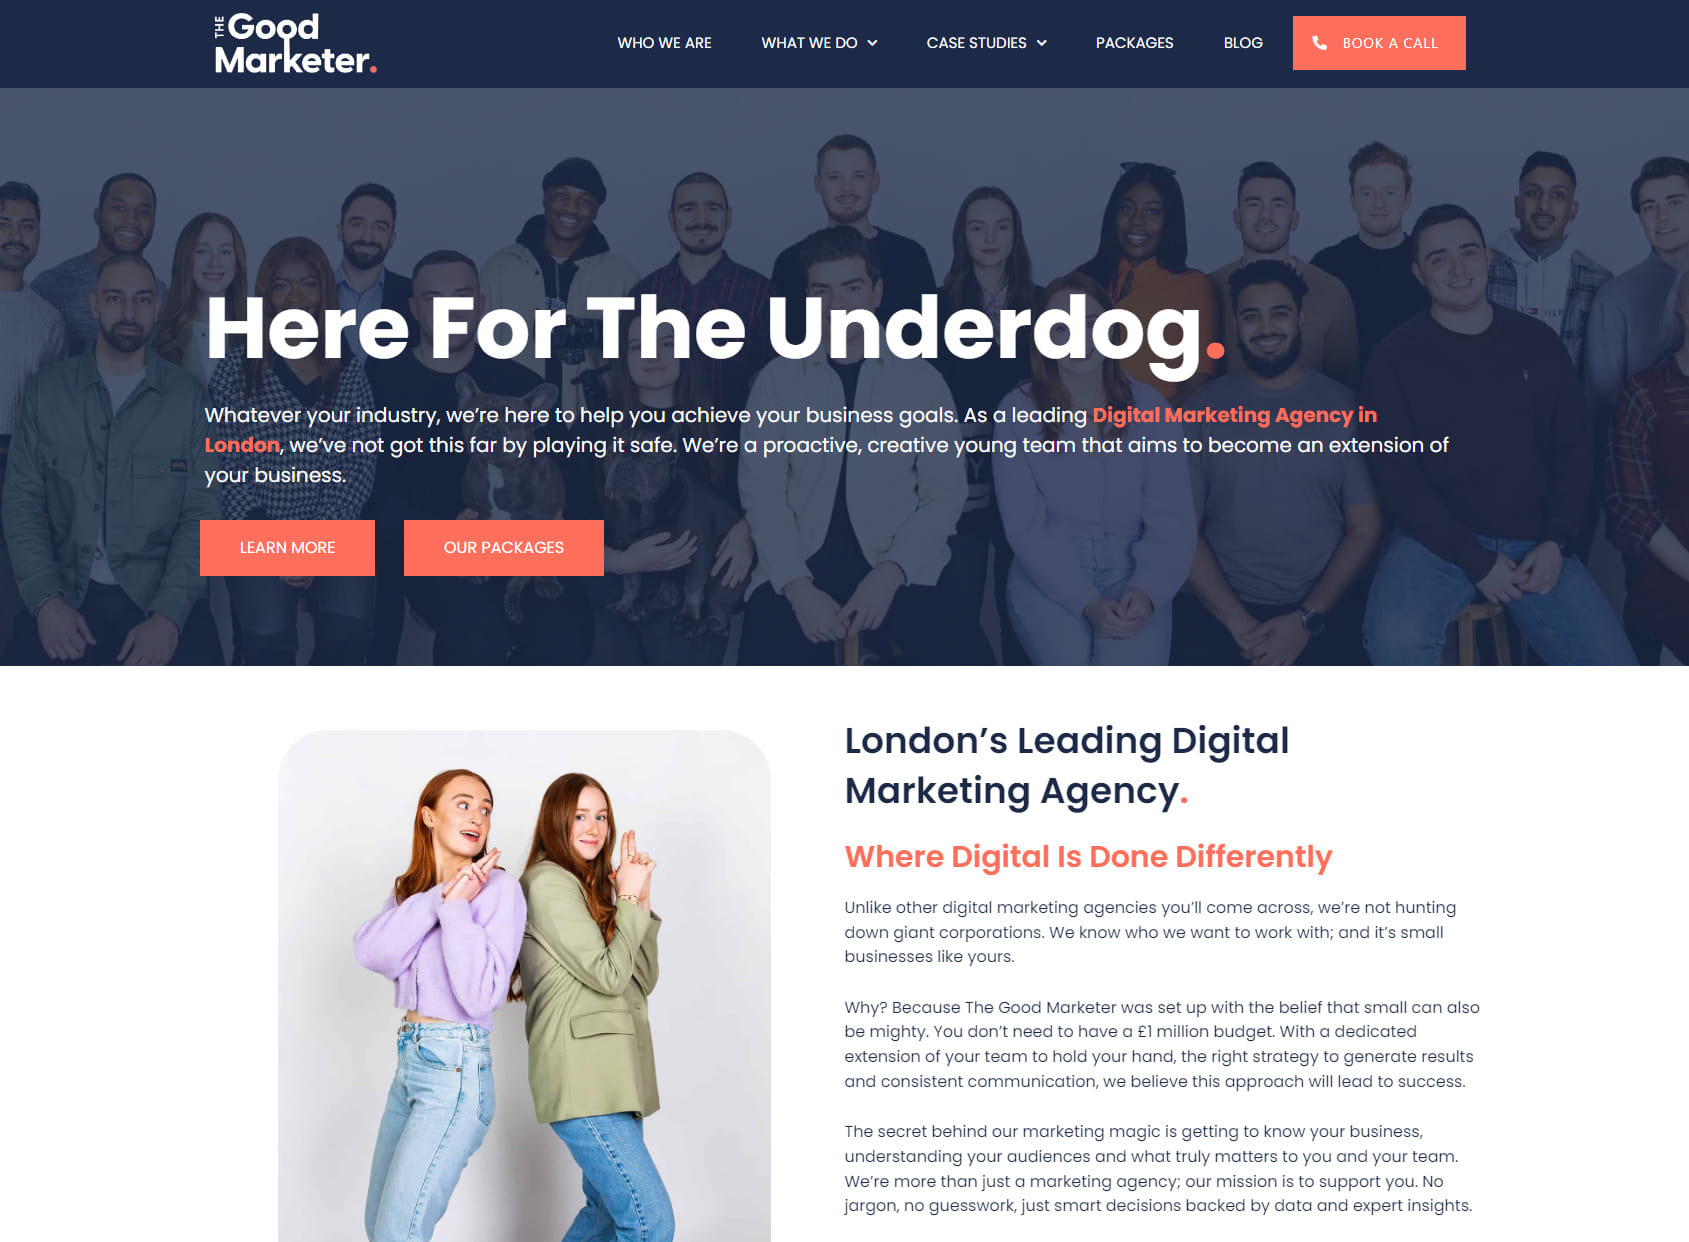 The Good Marketer | Digital Marketing Agency London